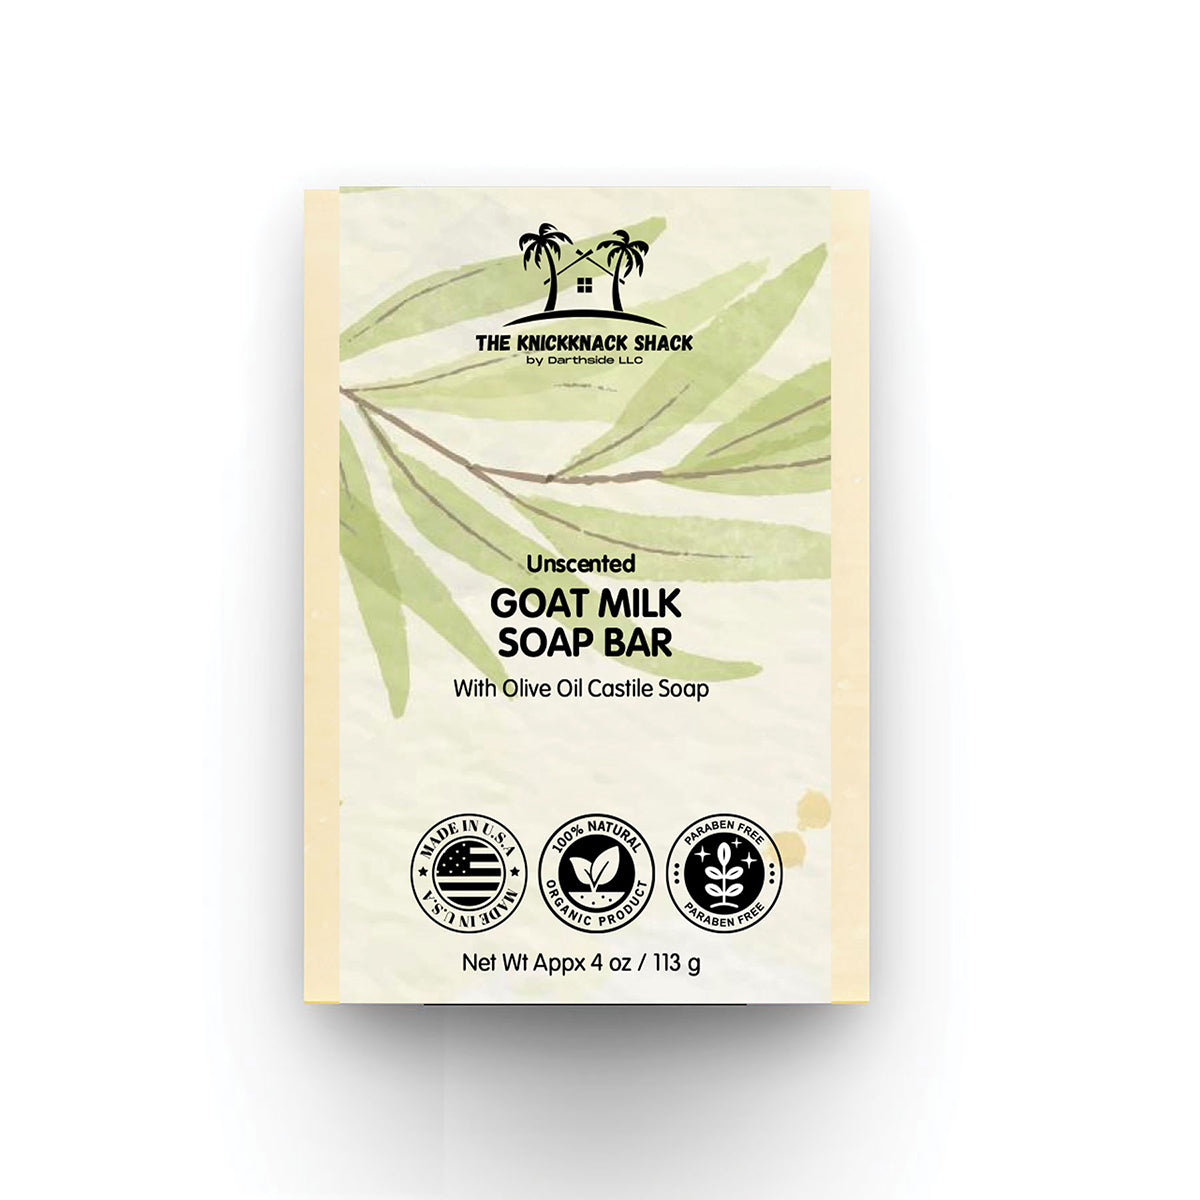 Unscented Goat Milk Soap Bar with Olive Oil Castile Soap